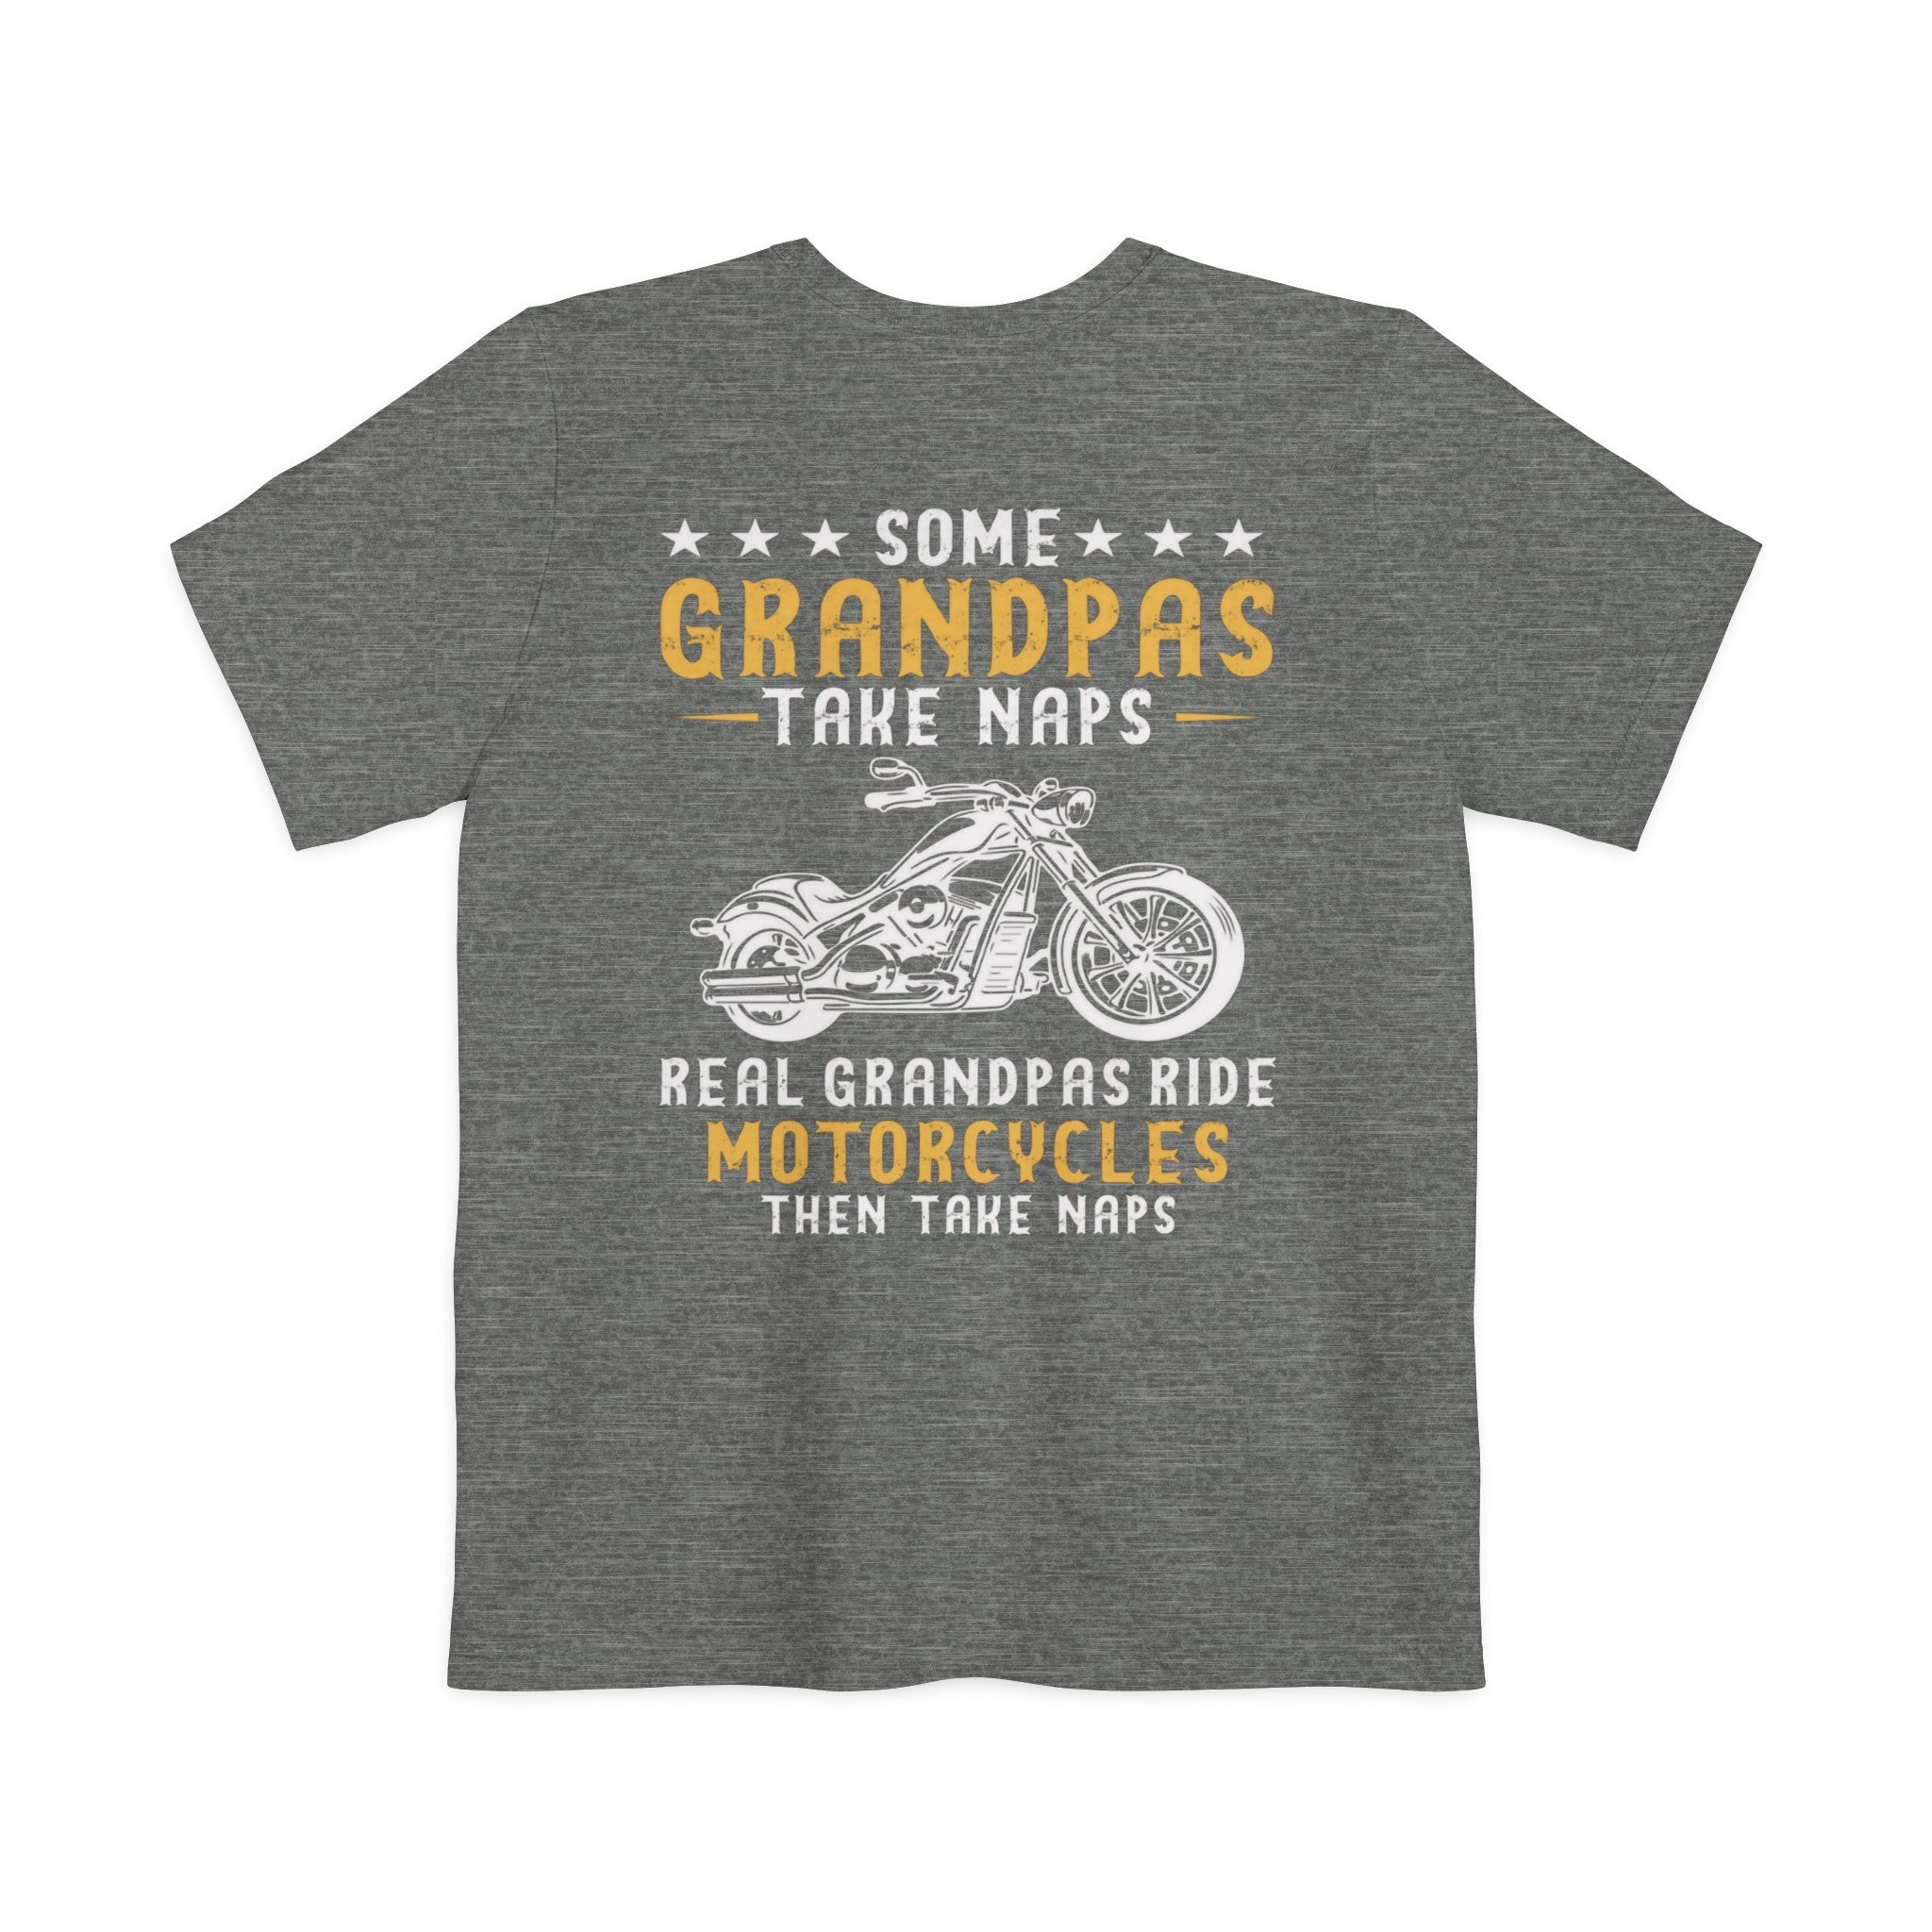 Kate McEnroe New York Biker Grandpa Pocket T - shirt For Fathers day, Birthday Gift, Real Grandpas Ride Motorcycles Then Take Naps Shirt, Funny Biker GiftT - Shirt19942781917993526660